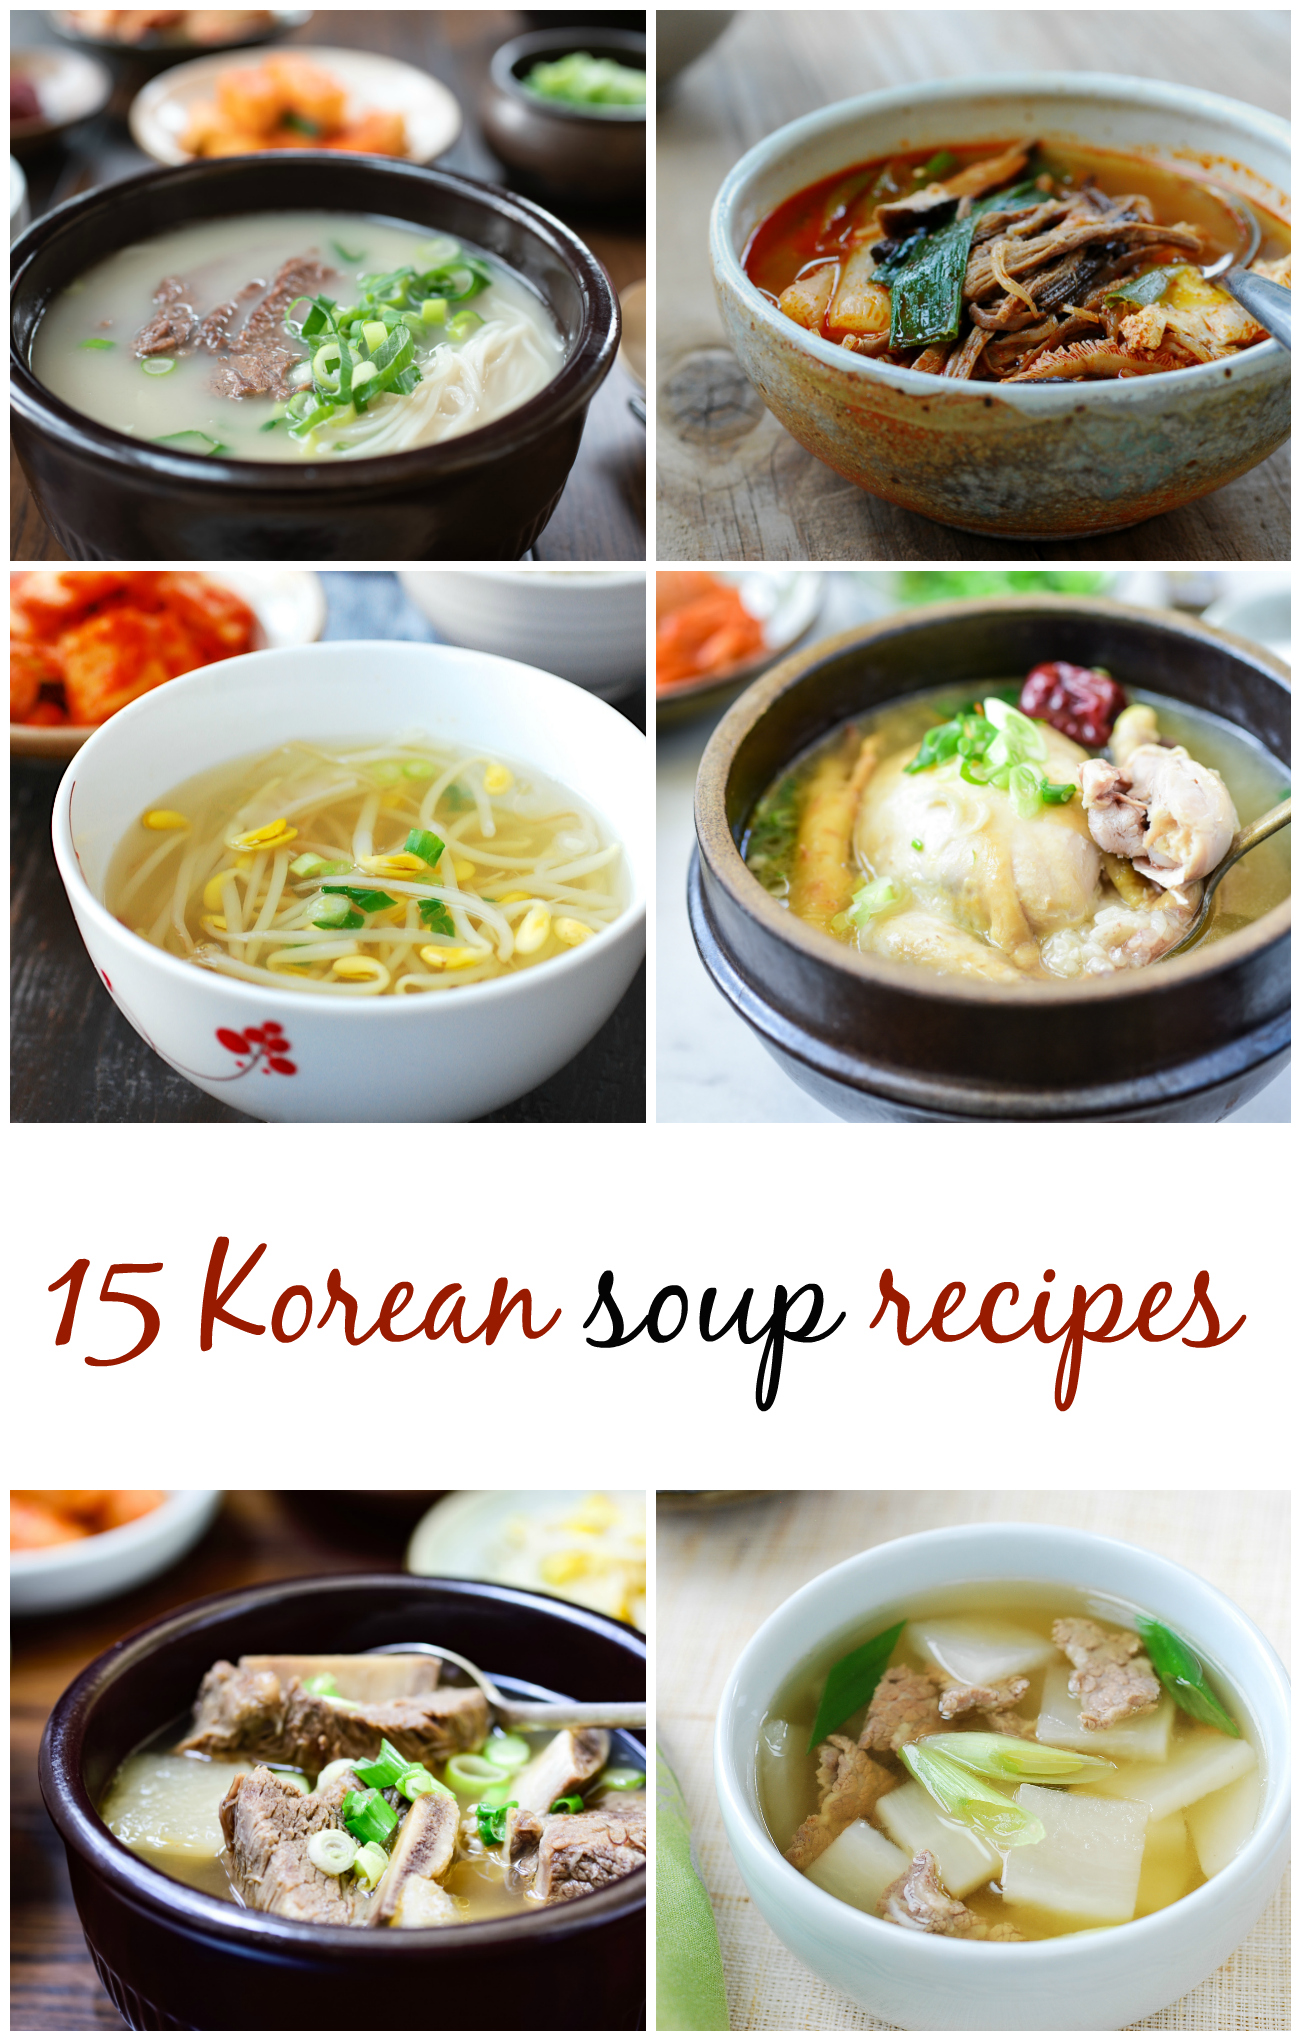 15 Korean soup recipes - 15 Korean Soup Recipes